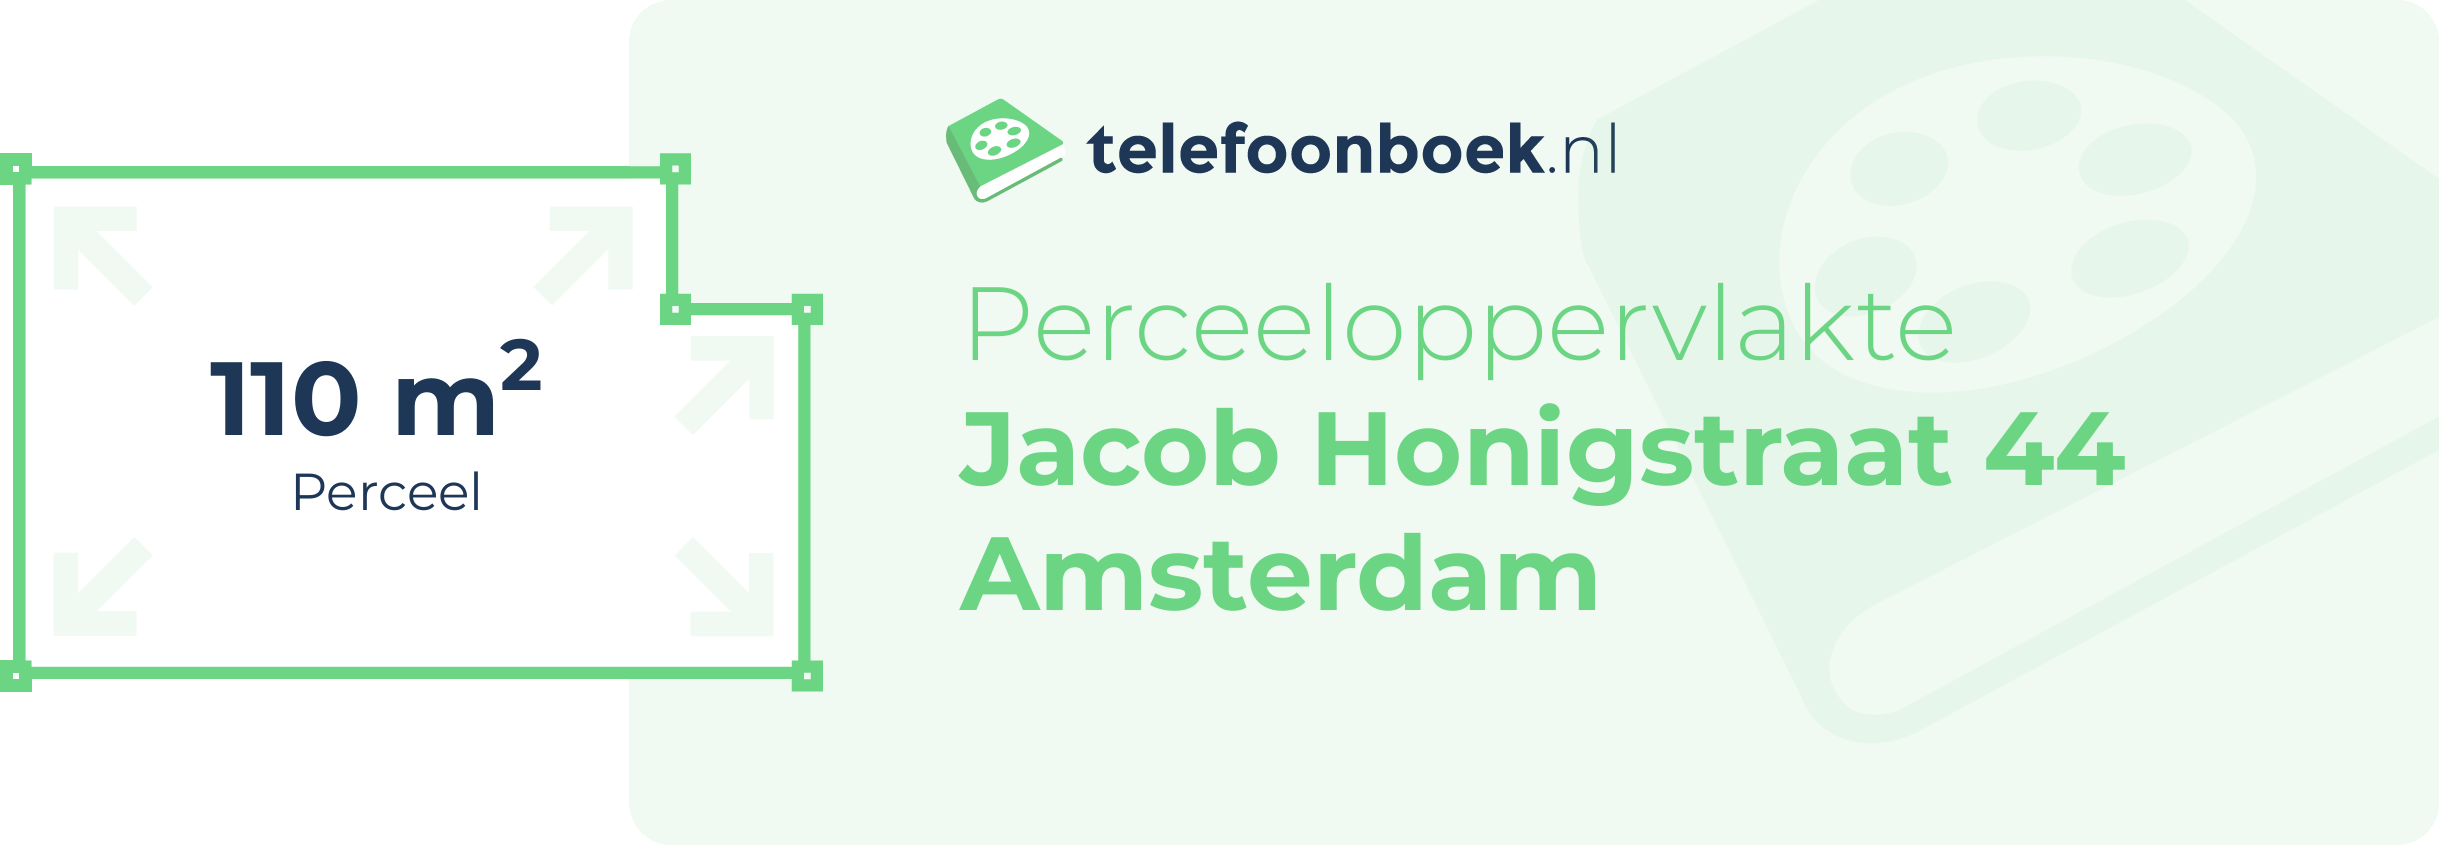 Perceeloppervlakte Jacob Honigstraat 44 Amsterdam